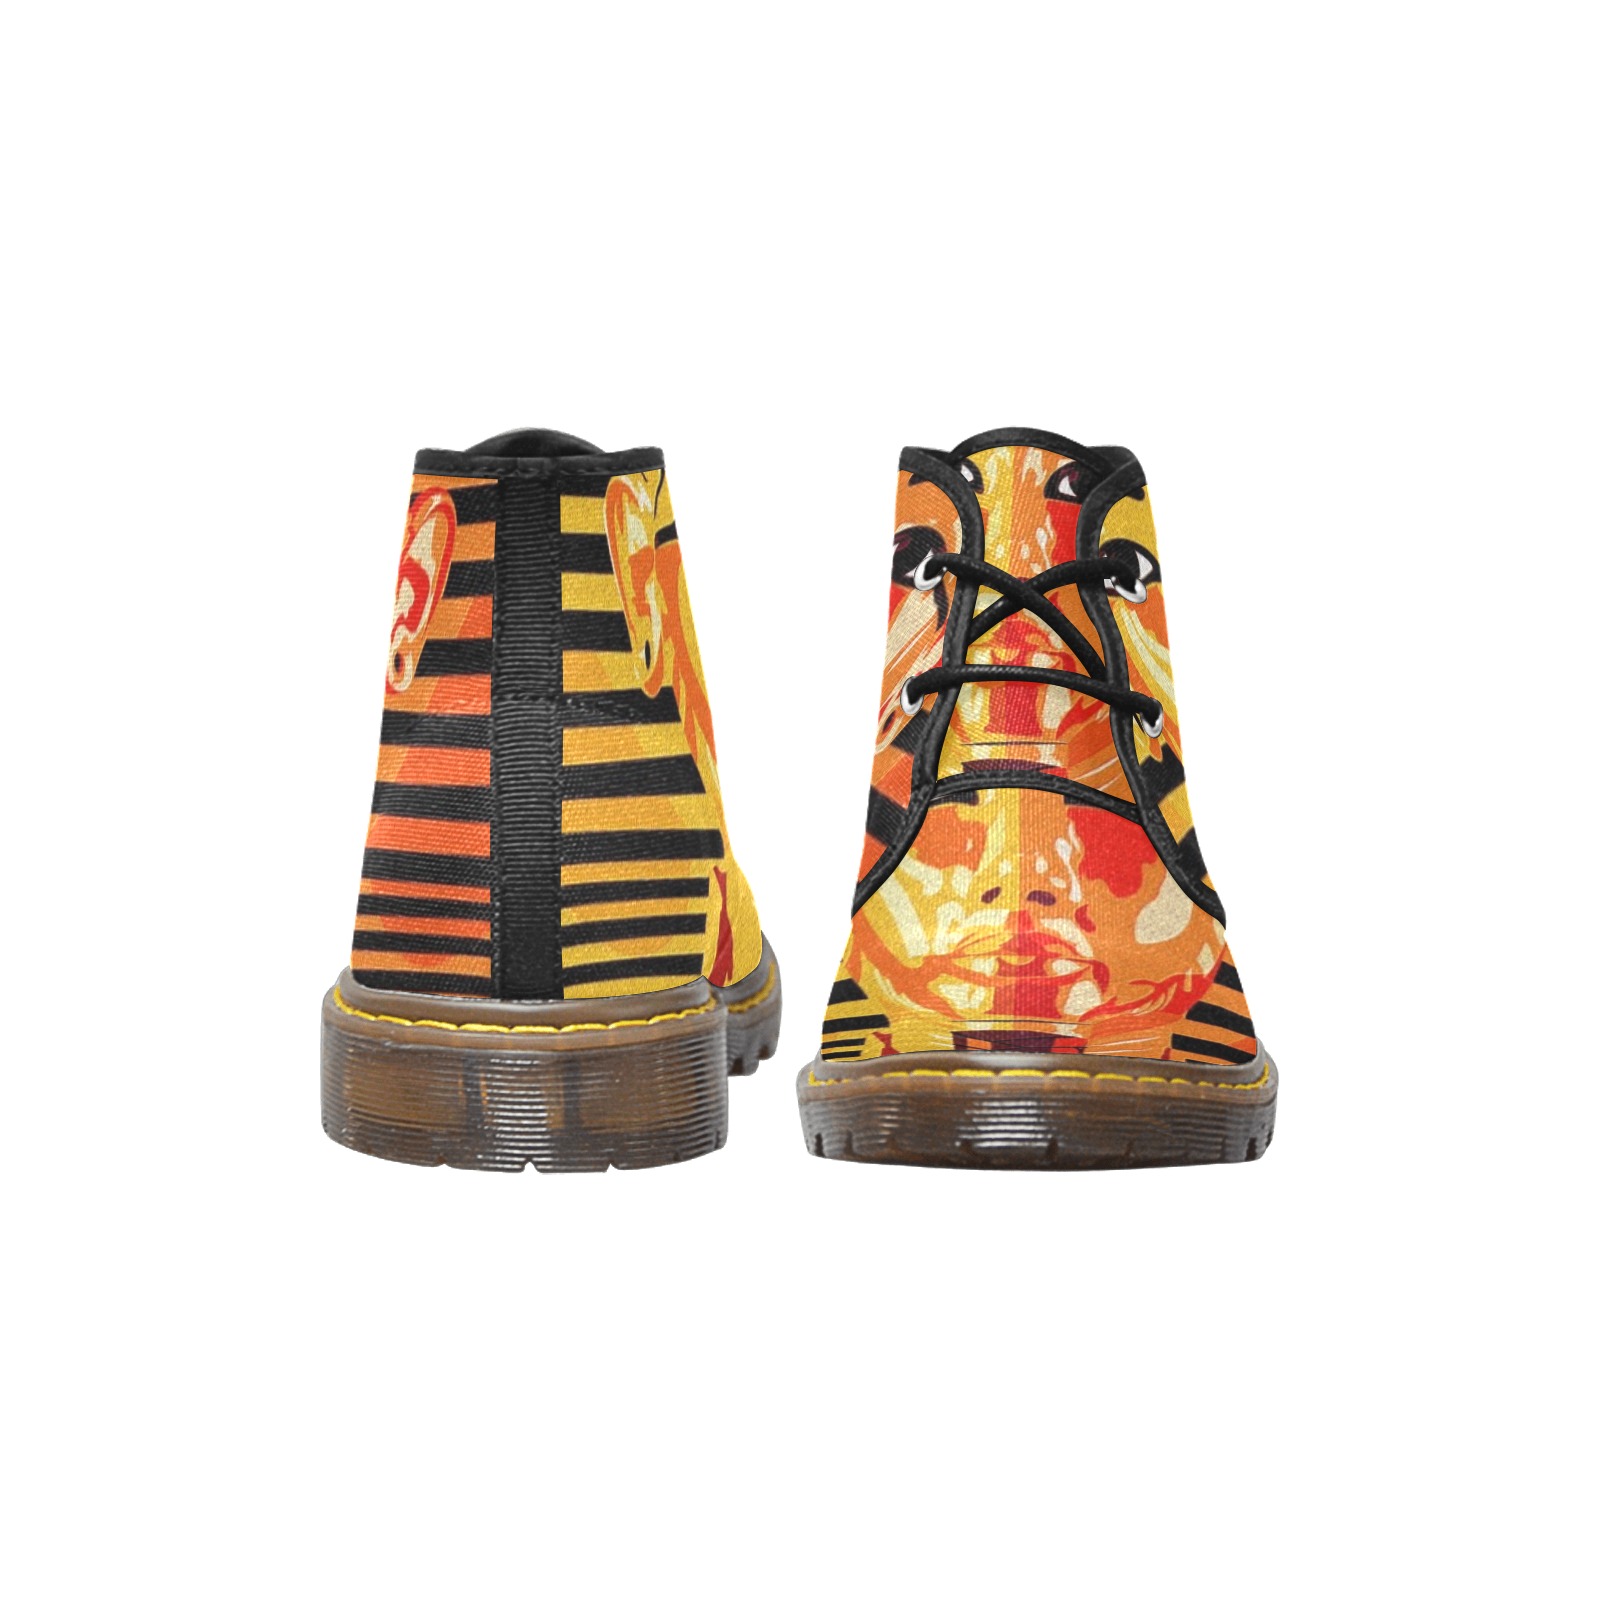 GOLDEN SLUMBER-KING TUT 2 Men's Canvas Chukka Boots (Model 2402-1)